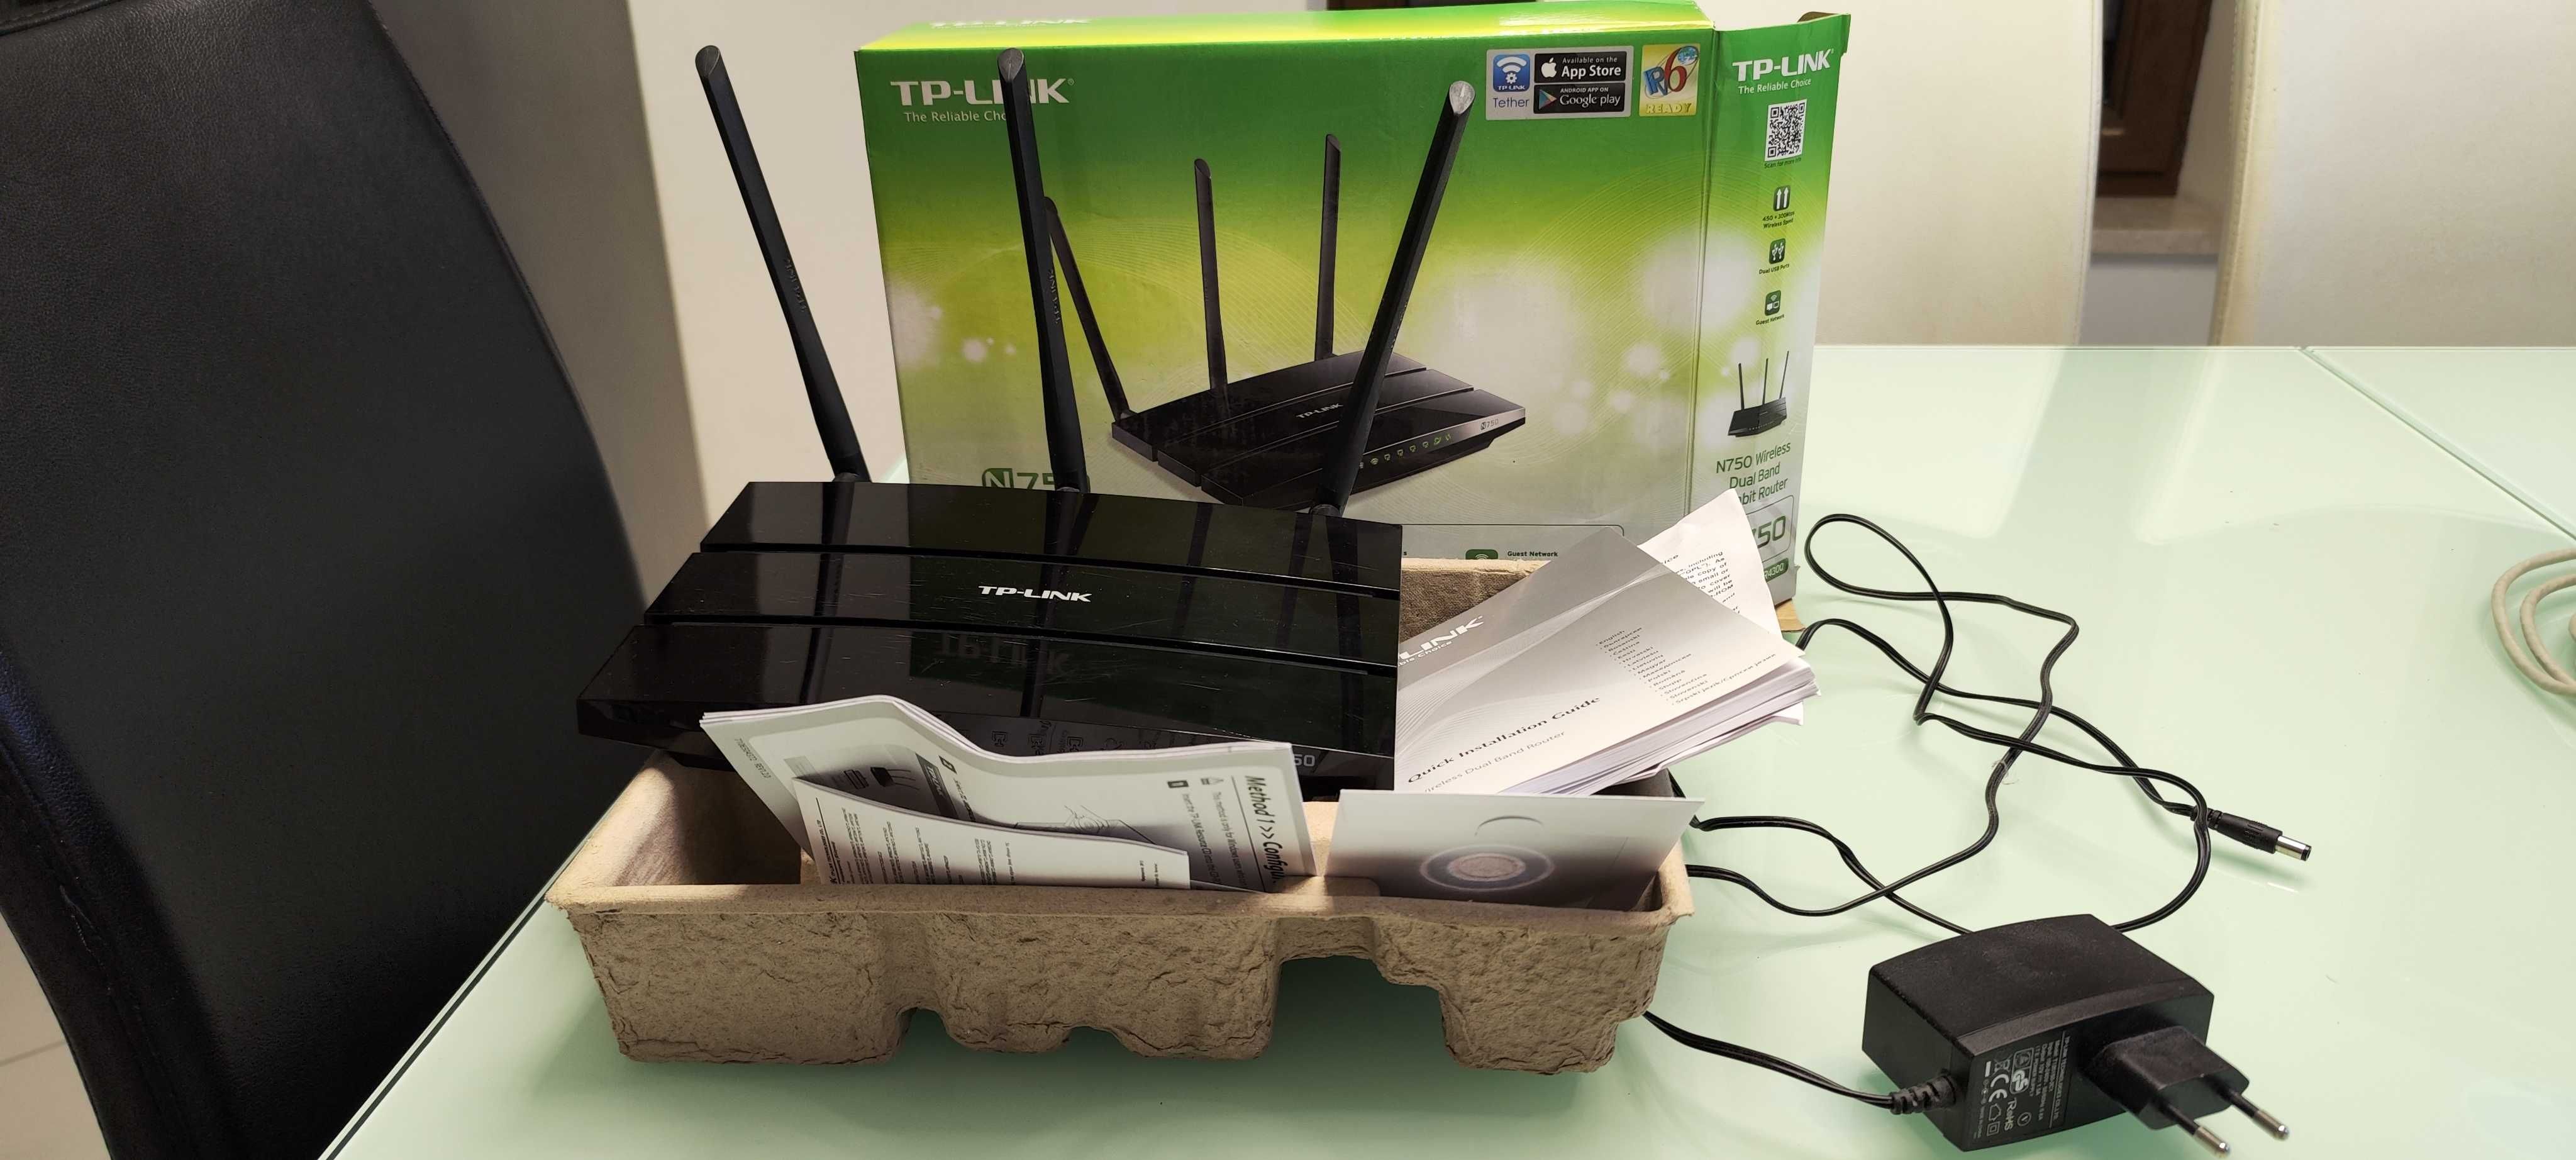 Router TP-LINK N750